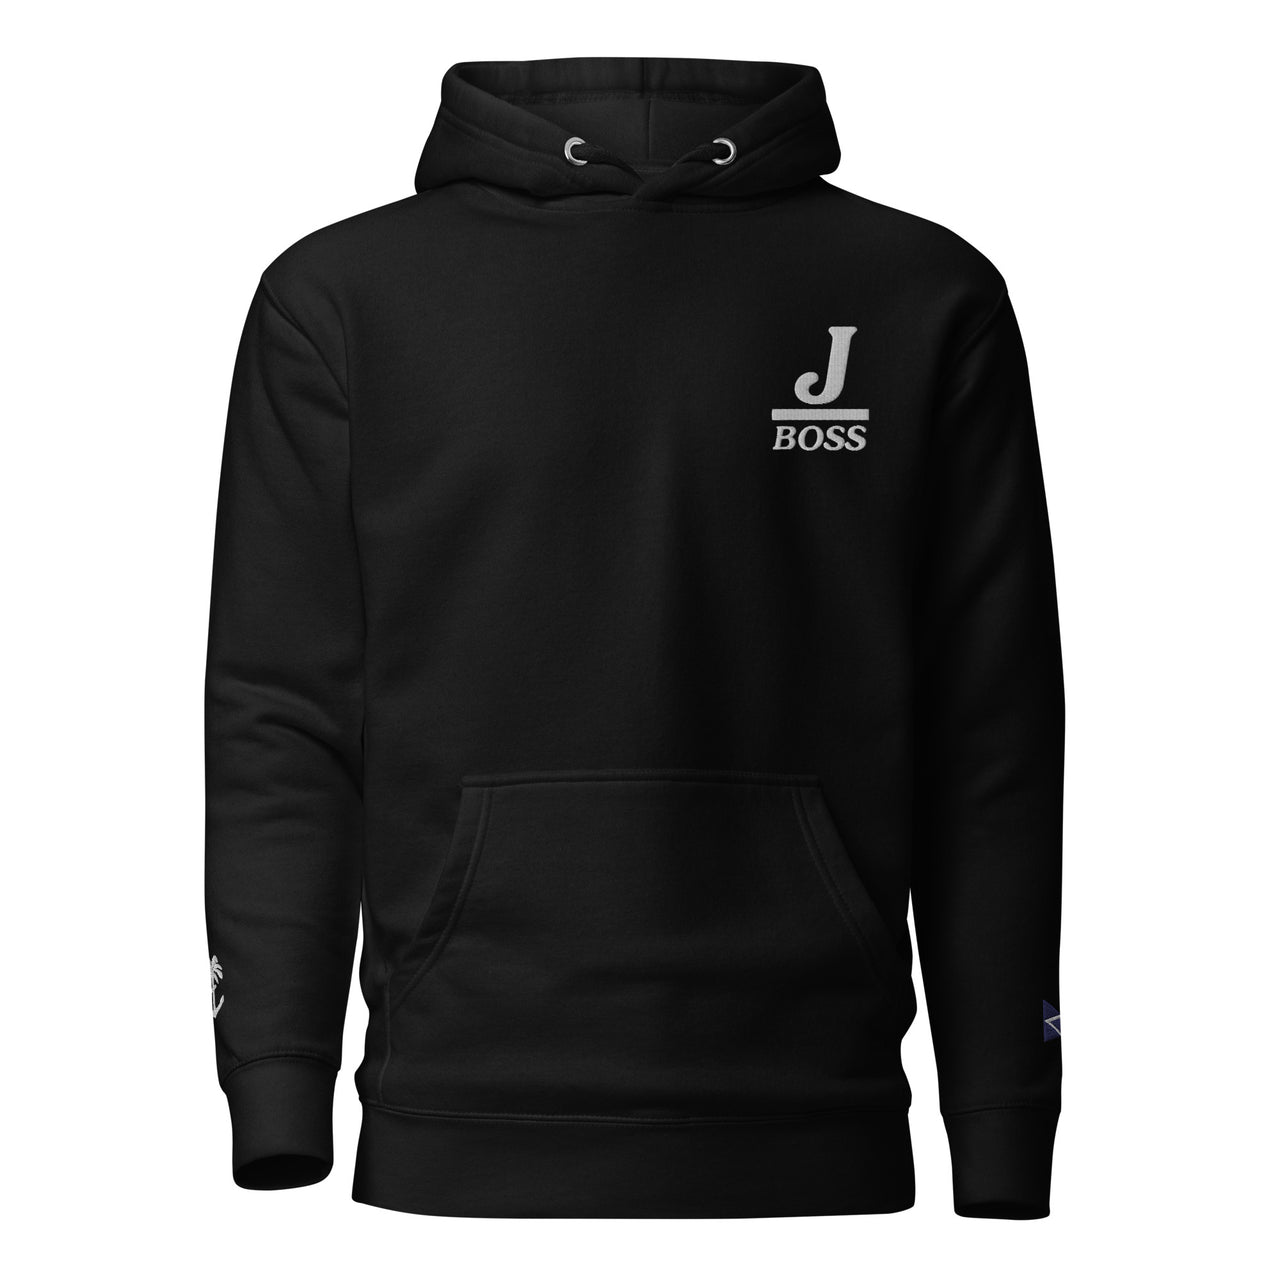 JBoss- Embroidered Unisex Hoodie